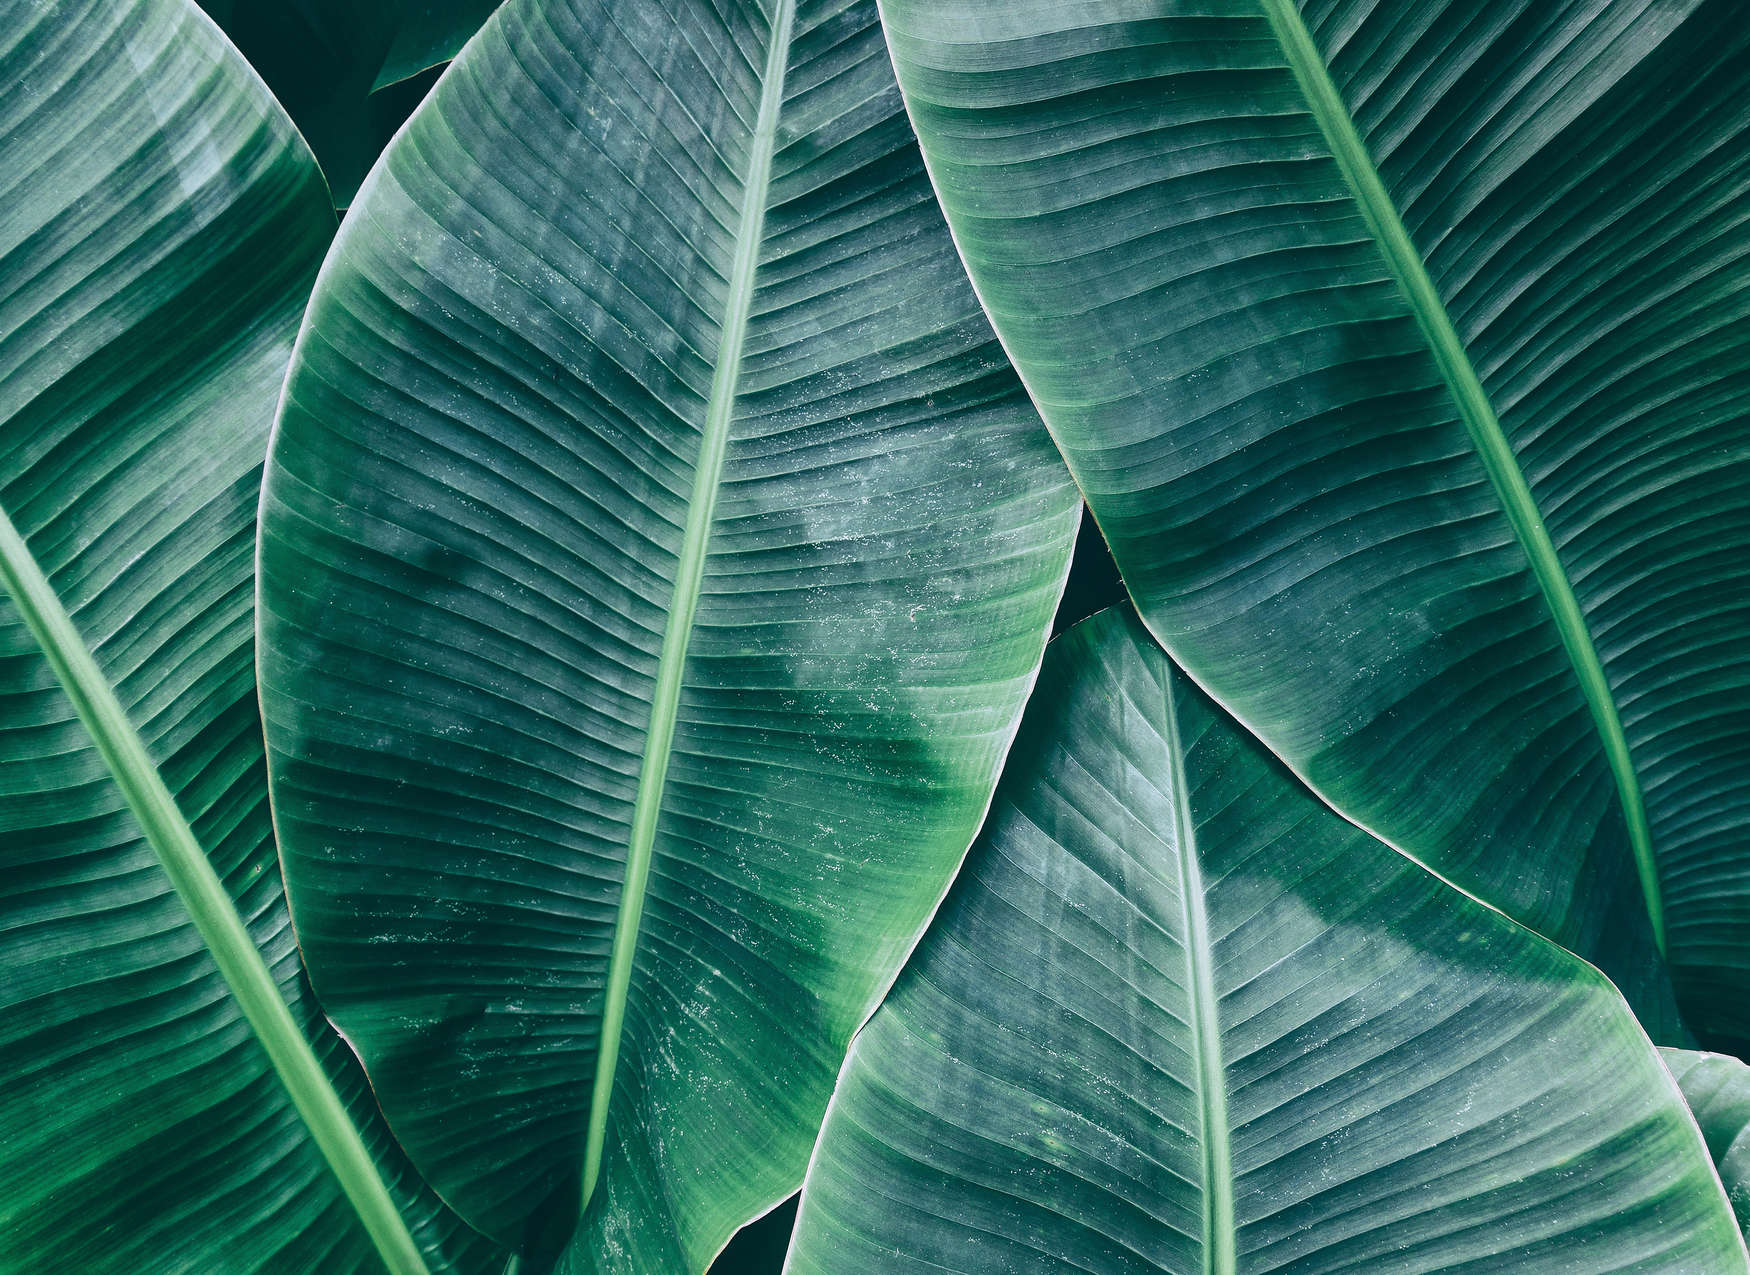             Jungle Feeling with Banana Leaf Wallpaper - Green
        